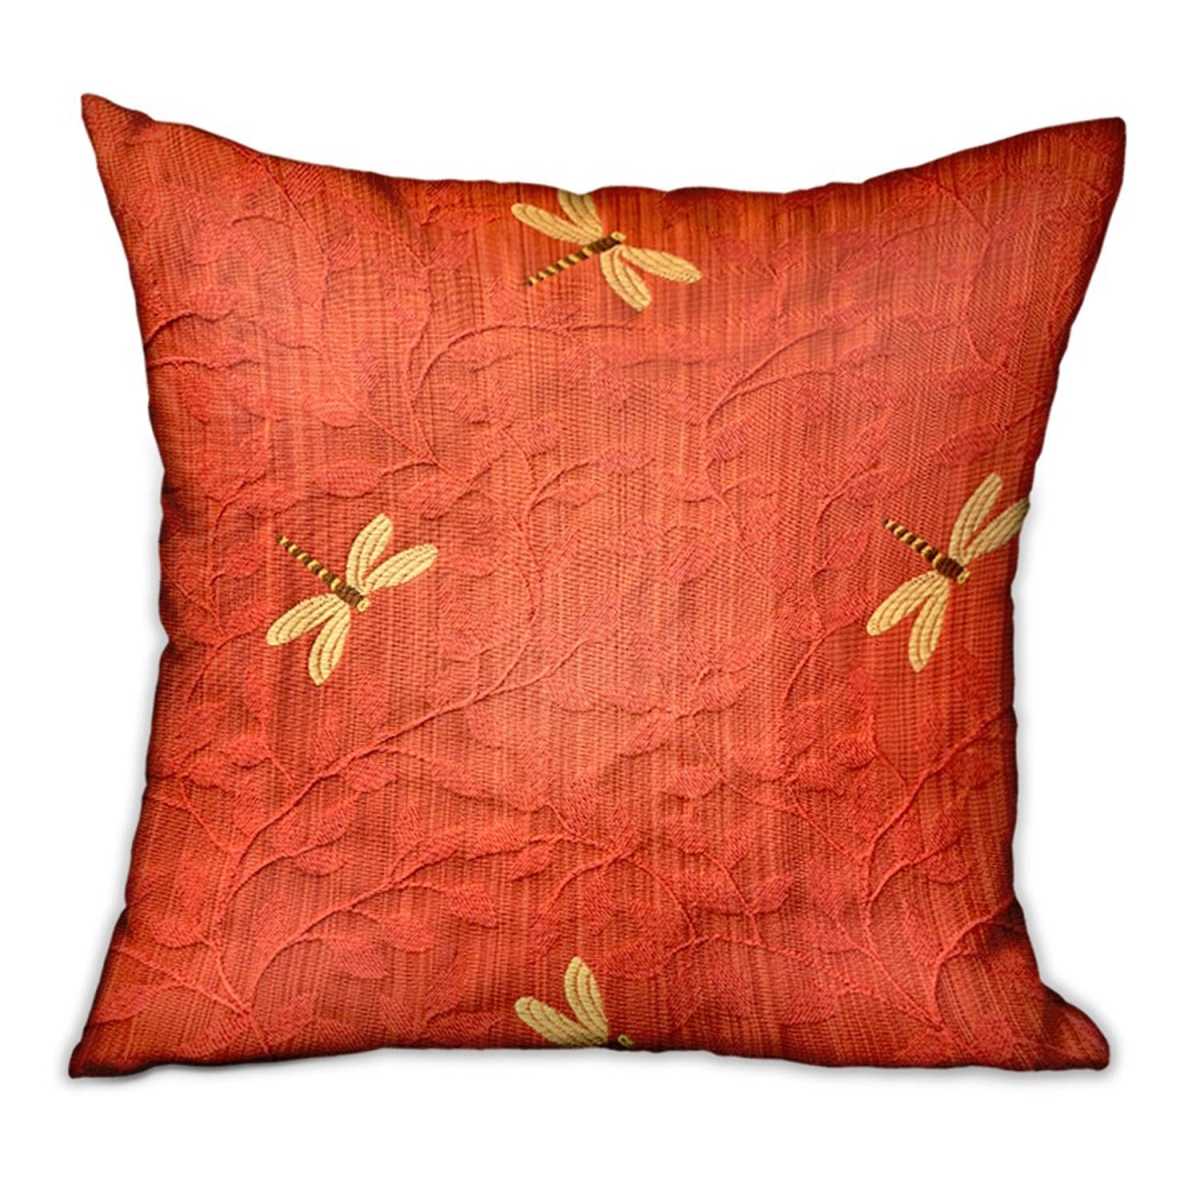 Pbdu1901-2020-dp 20 X 20 In. Firefly Red Animal Motif Luxury Throw Pillow